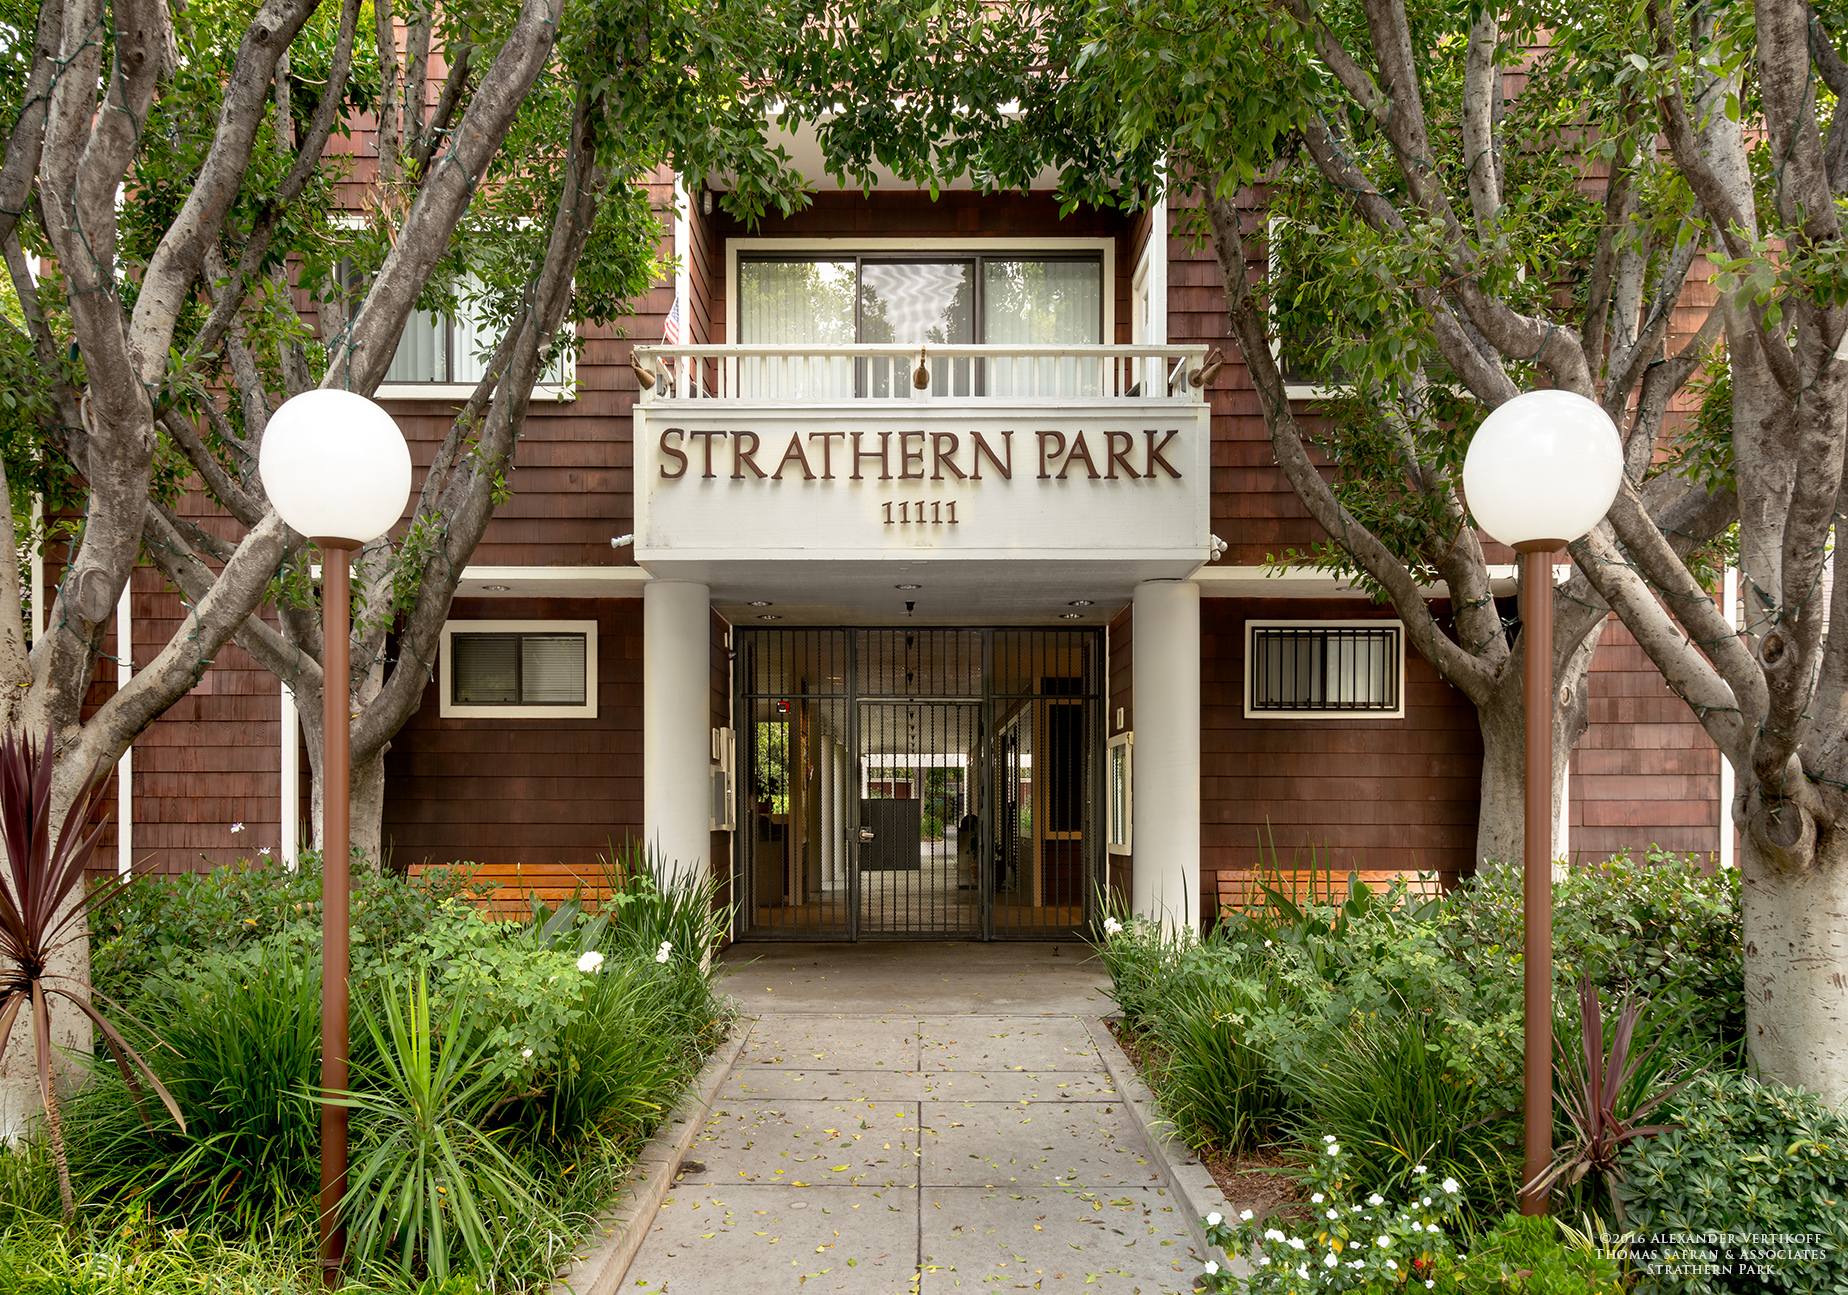 Strathern Park